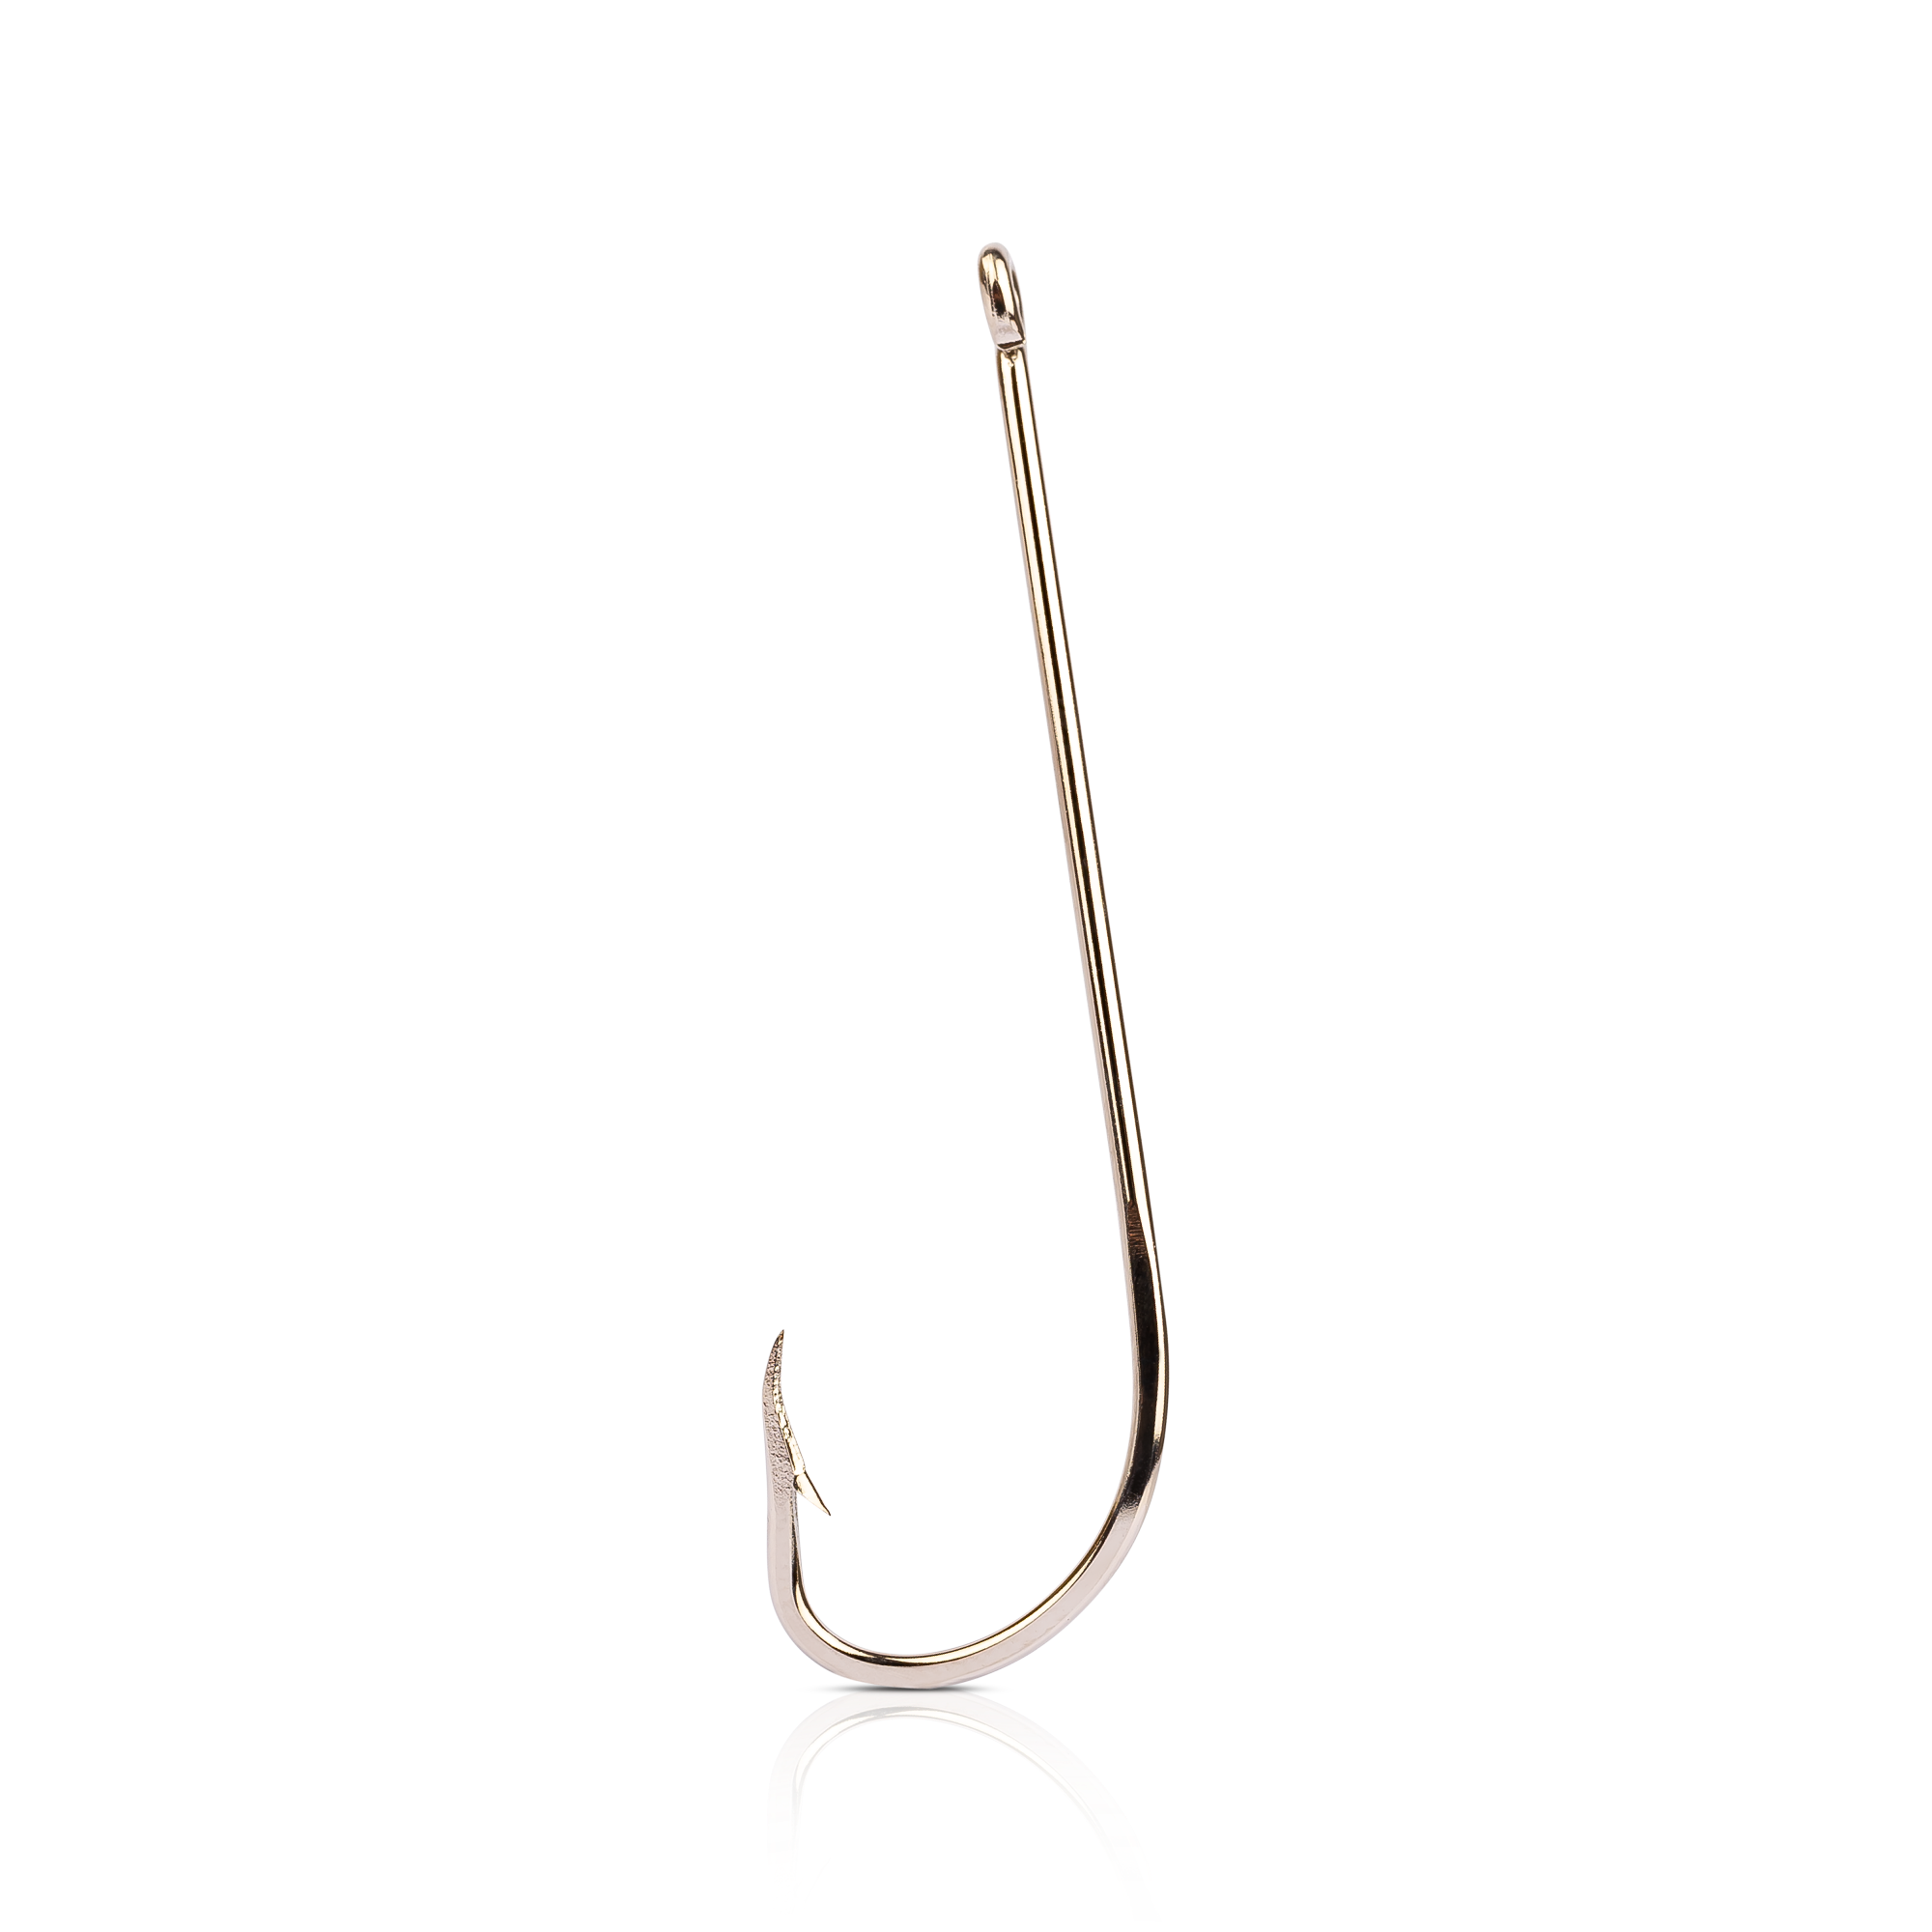 Mustad Beak Baitholder Hook (Size 6)(10 Pack)(Nickel)